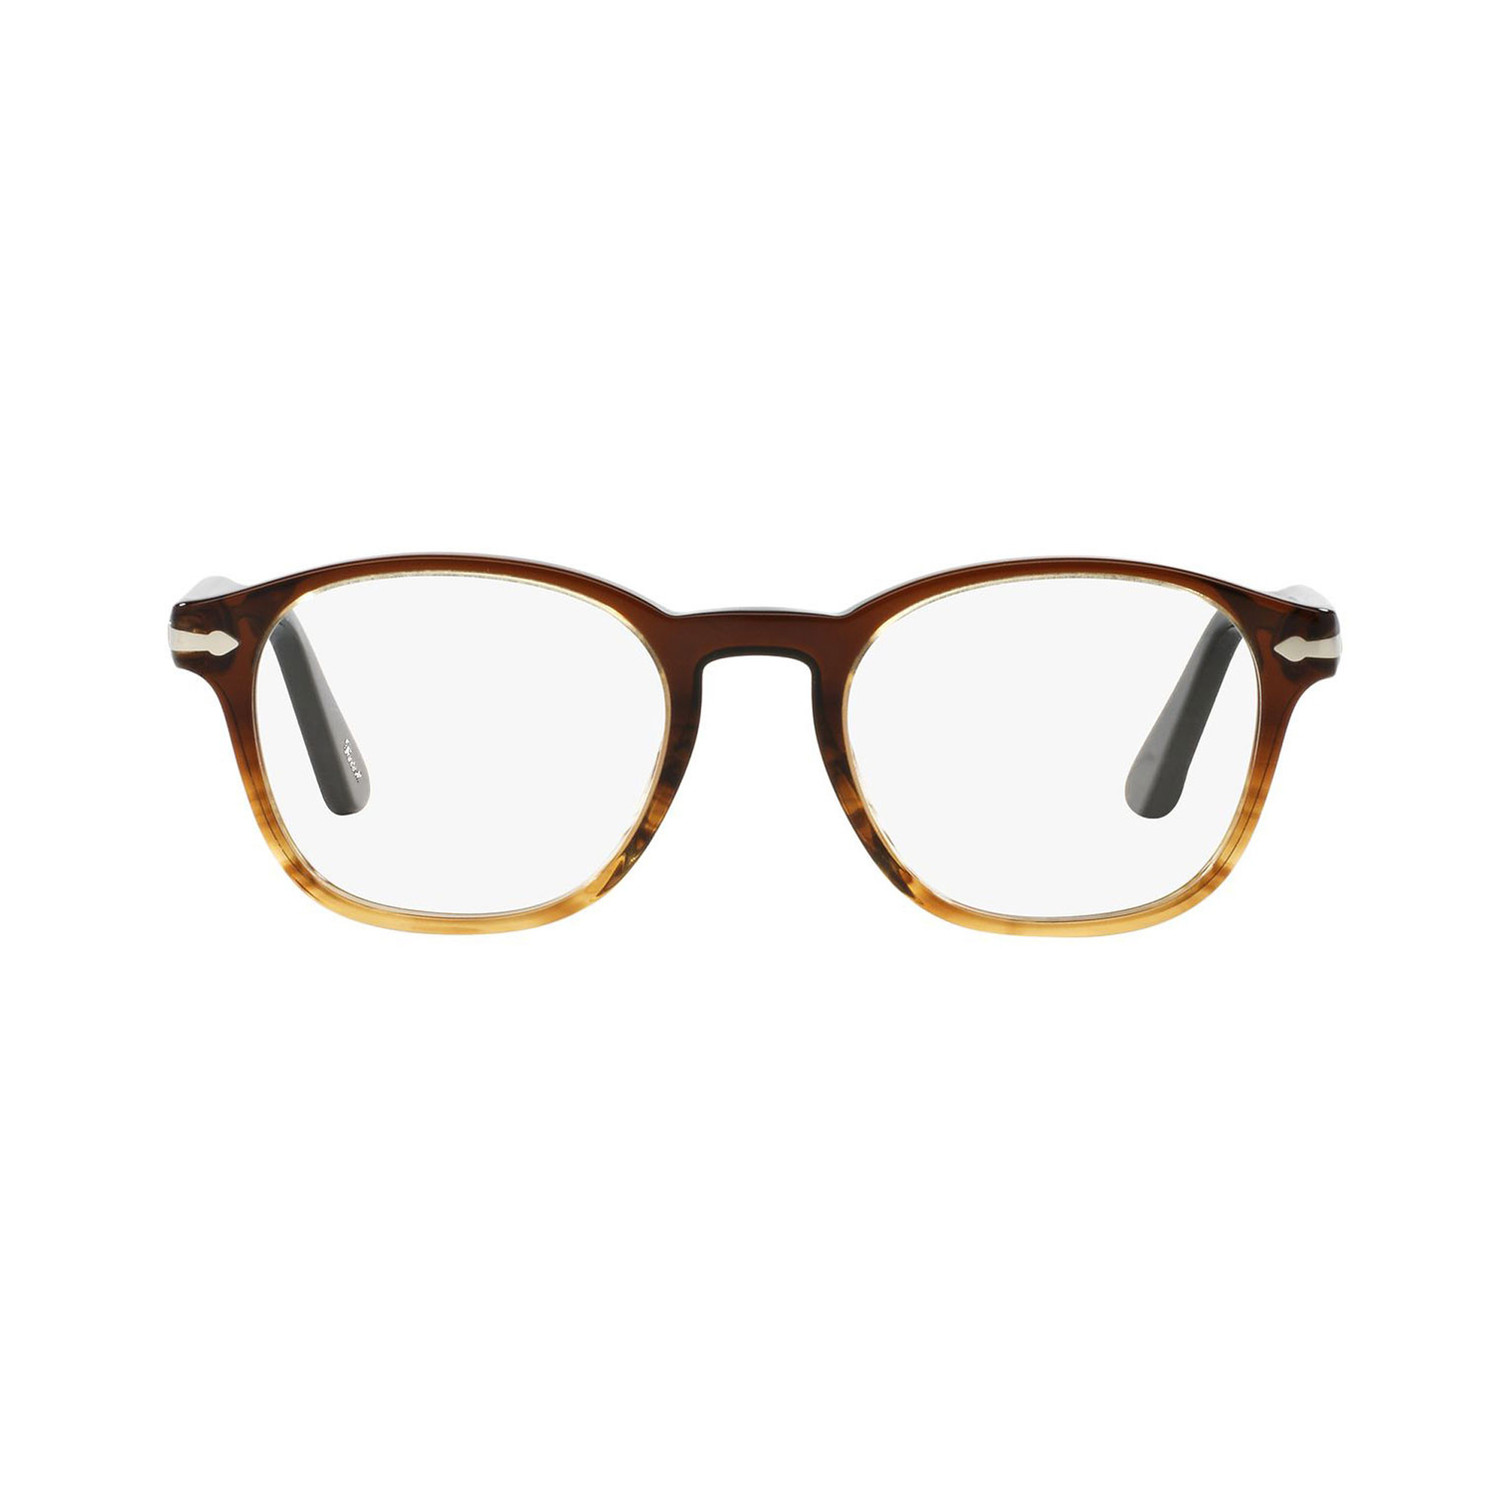 Persol Men S Round Optical Frames Striped Brown Designer Eyewear Touch Of Modern